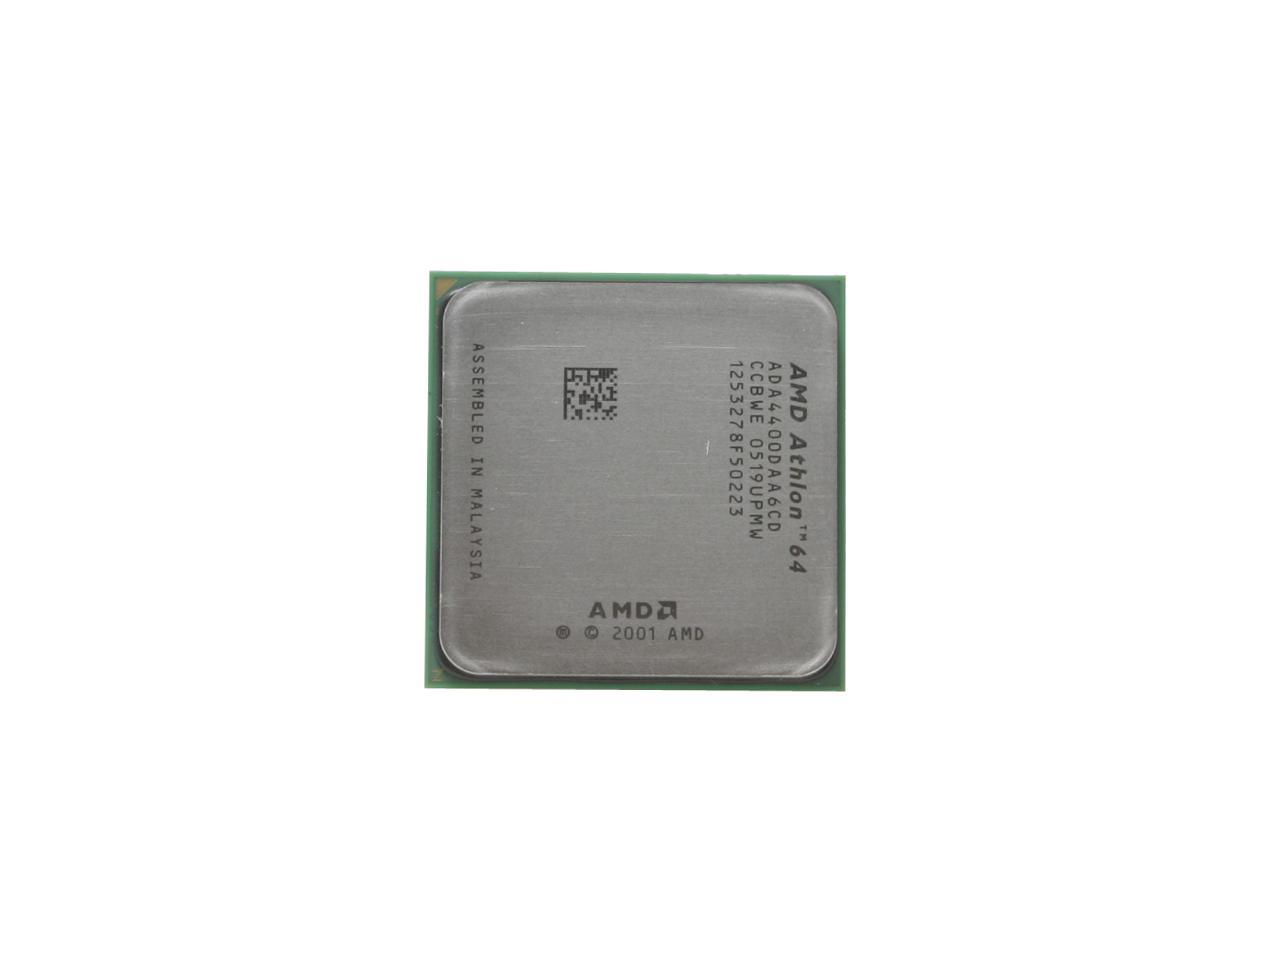 Athlon 64 x2 4400. AMD Opteron 6128 he. AMD Athlon 64 x2 Box. AMD Athlon 64 x2 4400+ Box.